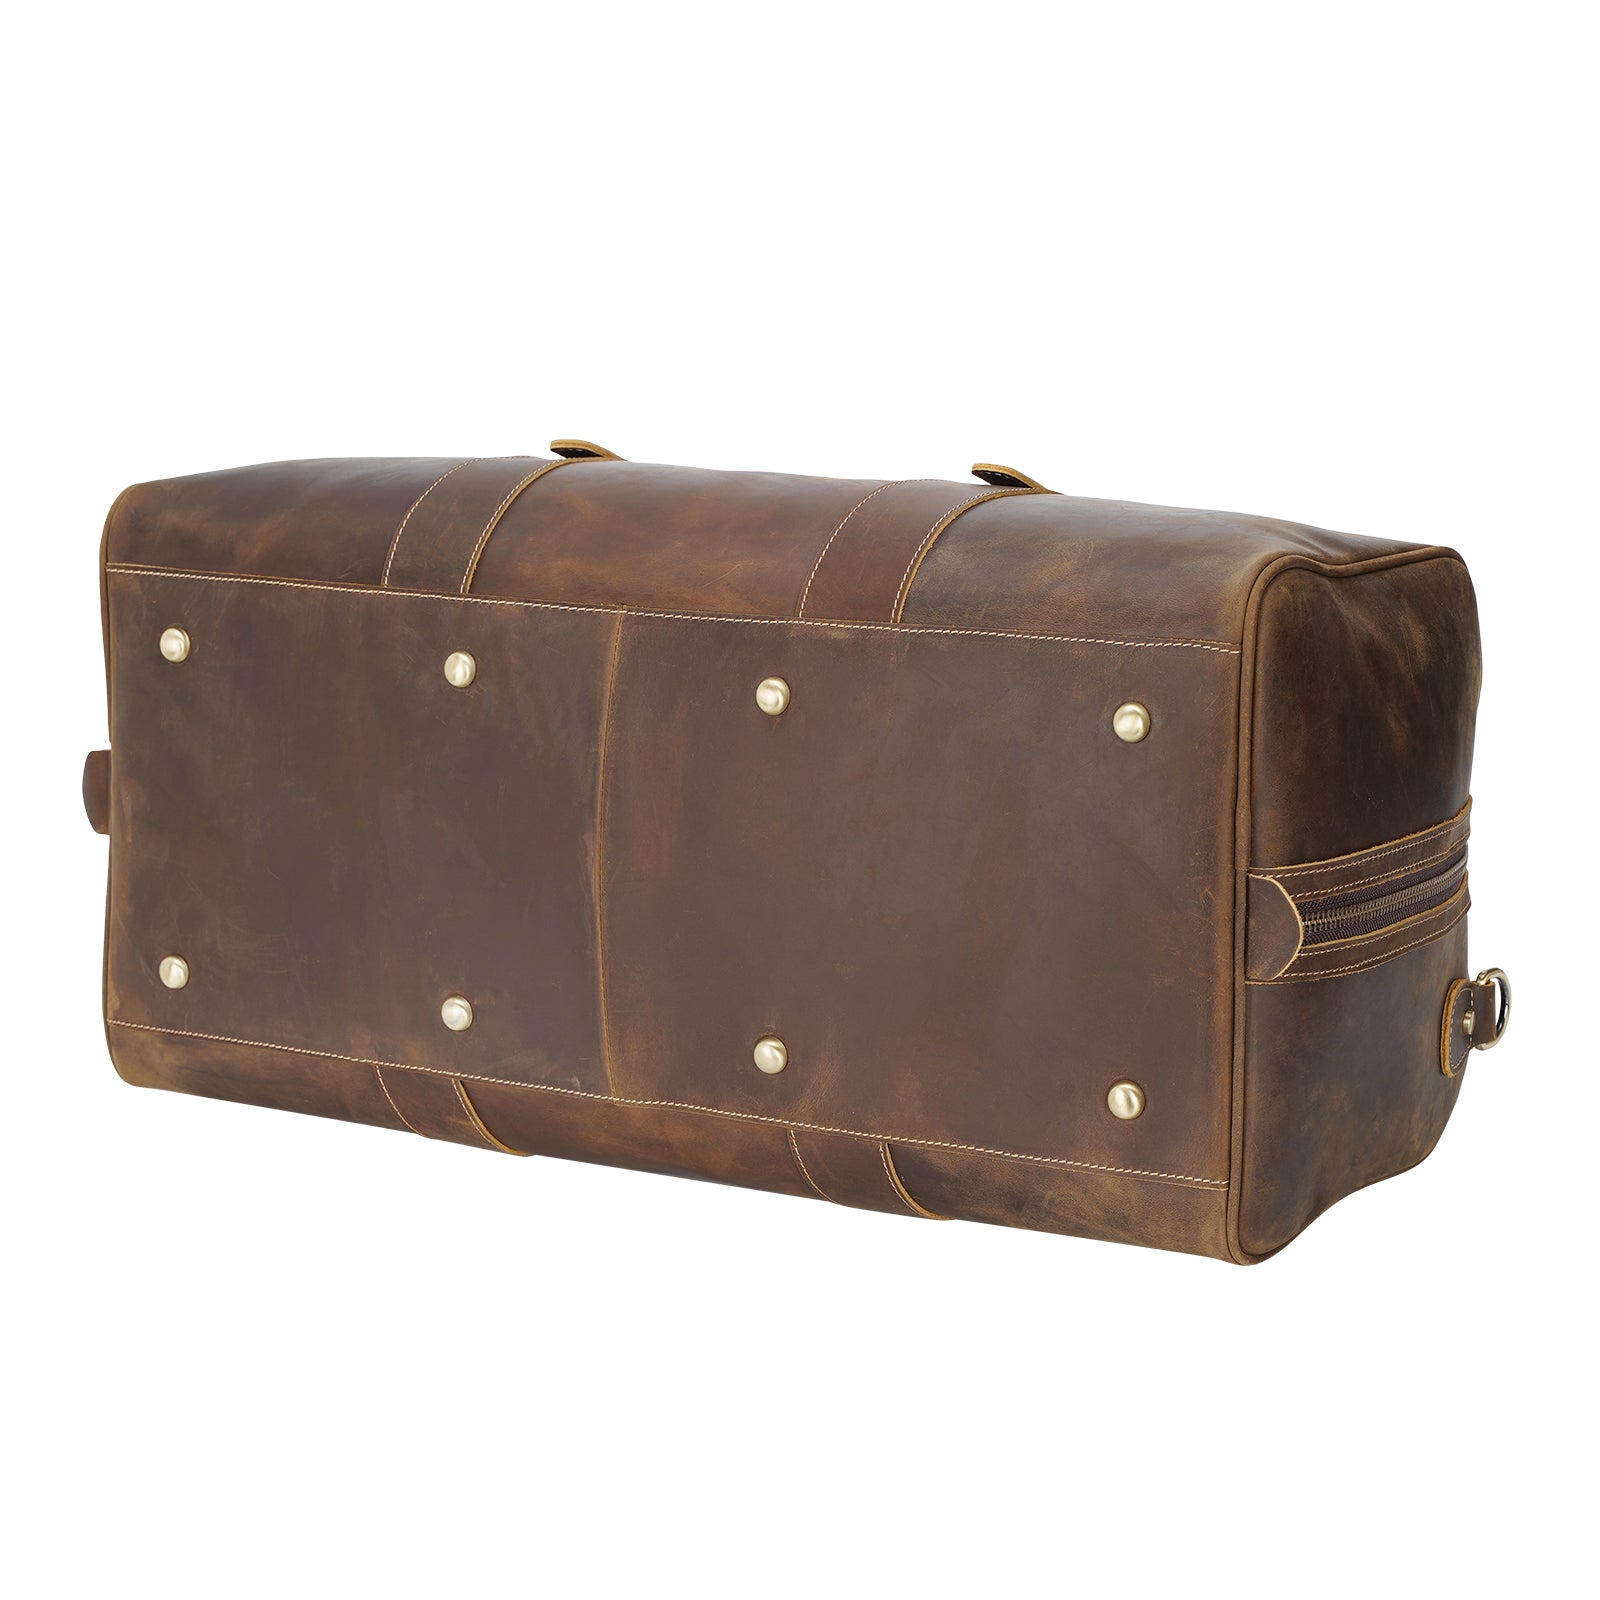 Polare 23" Full Grain Leather Weekender Travel Overnight Luggage Duffel Bag For Men